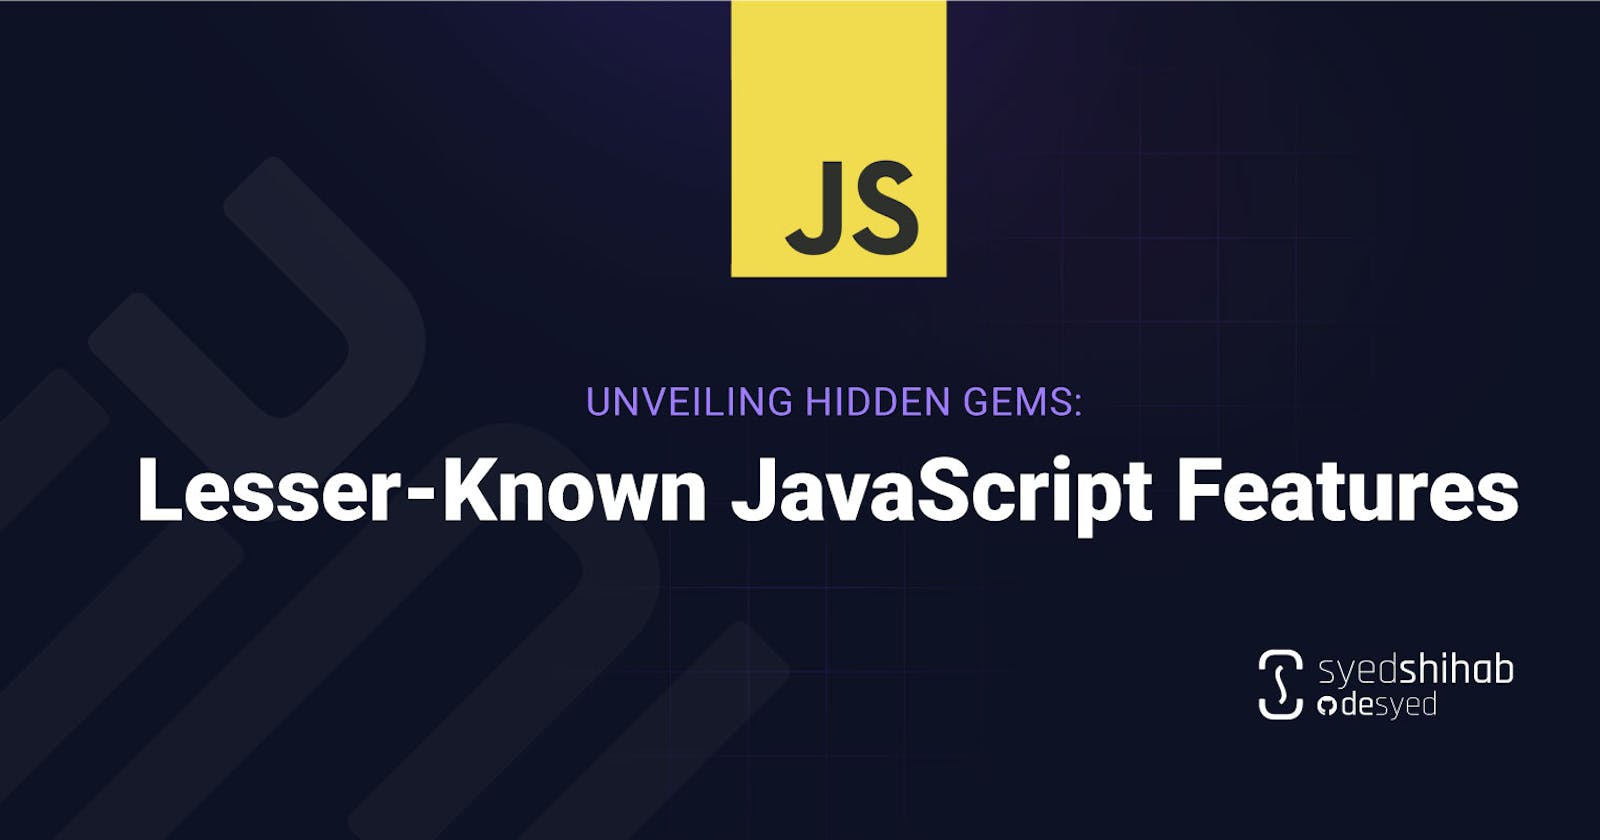 Unveiling Hidden Gems: Lesser-Known JavaScript Features